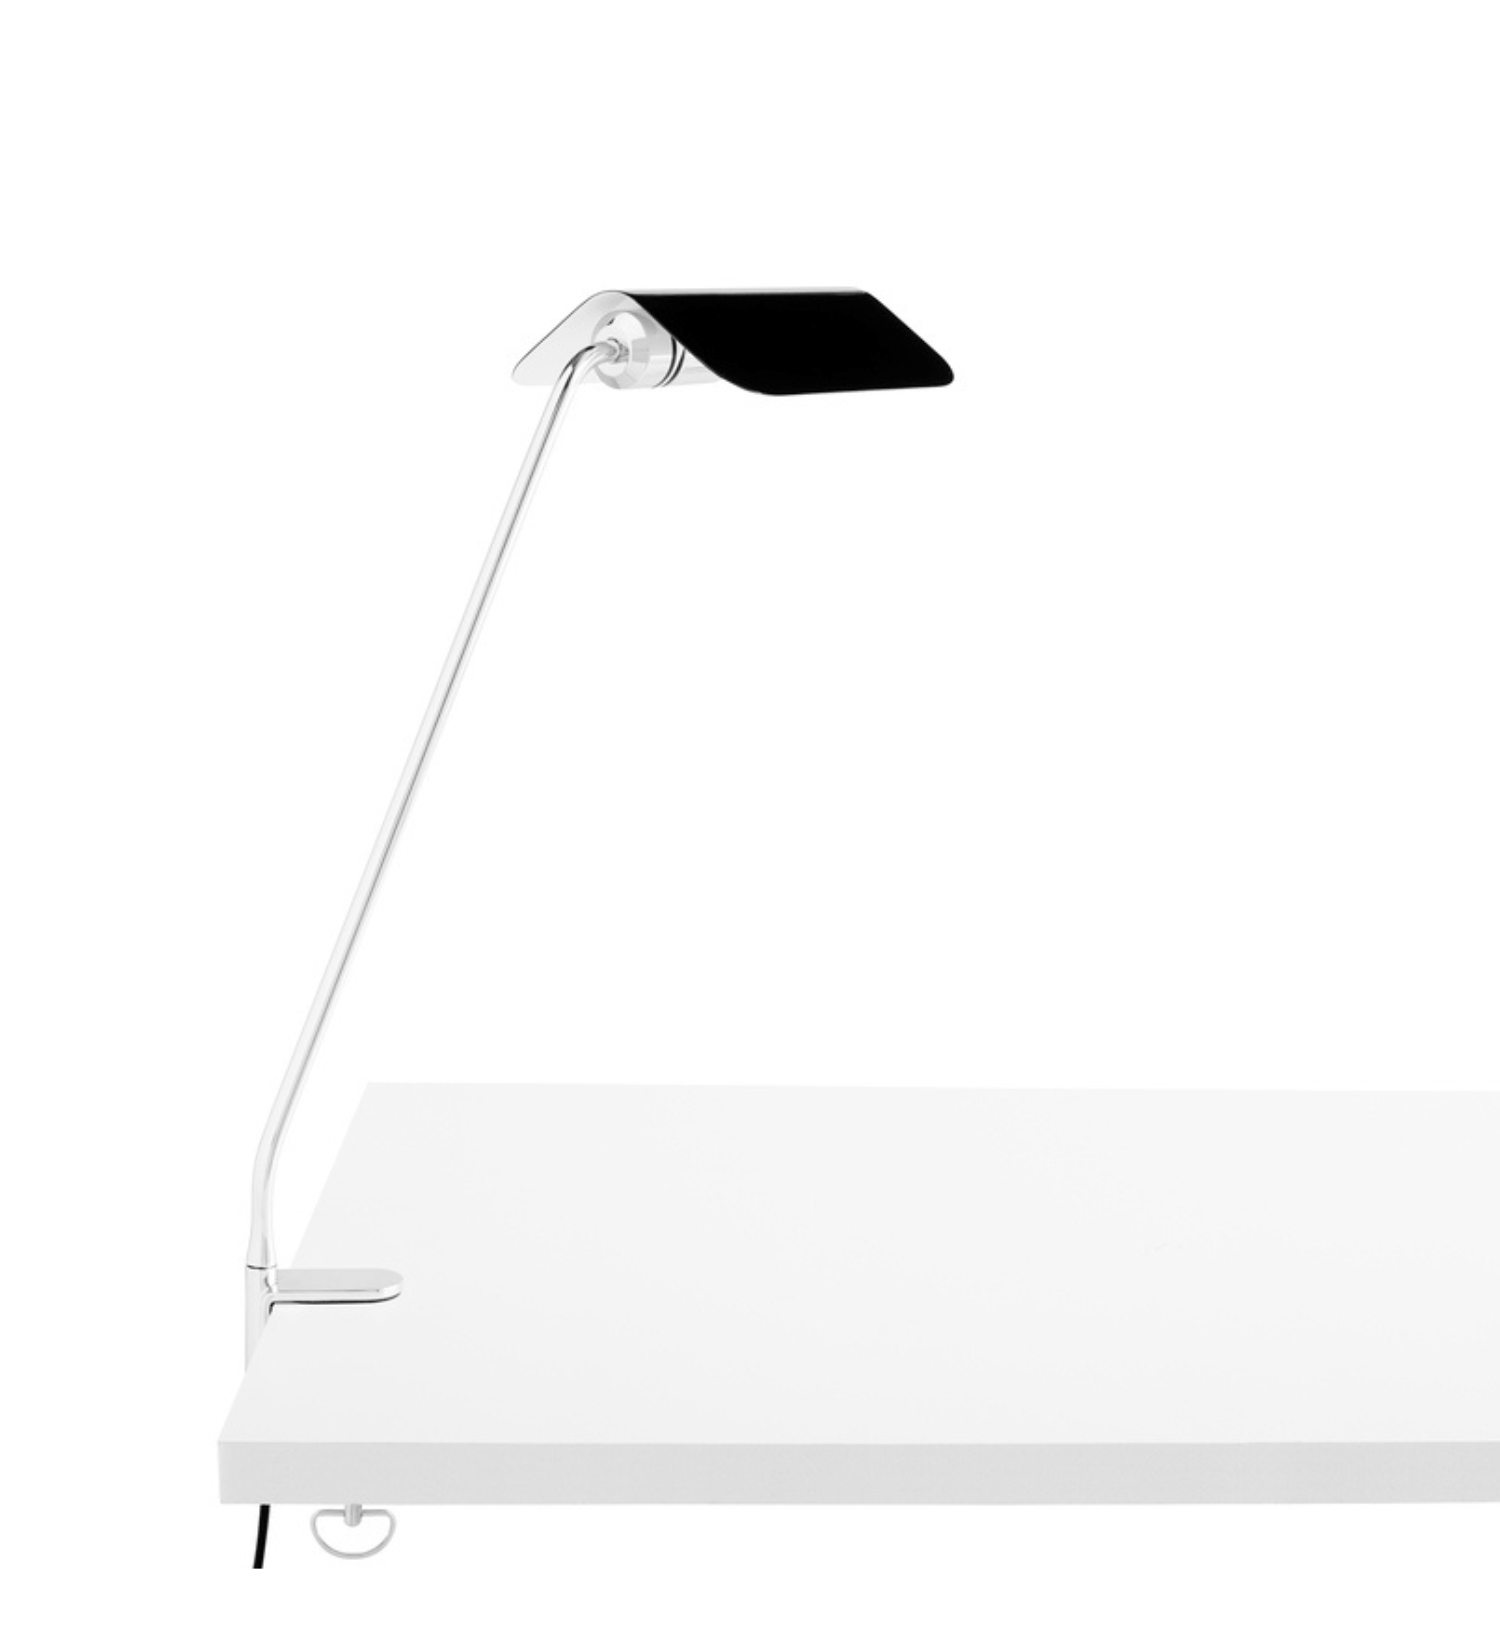 Lampa biurkowa Apex Desk Clip Lamp marki Hay